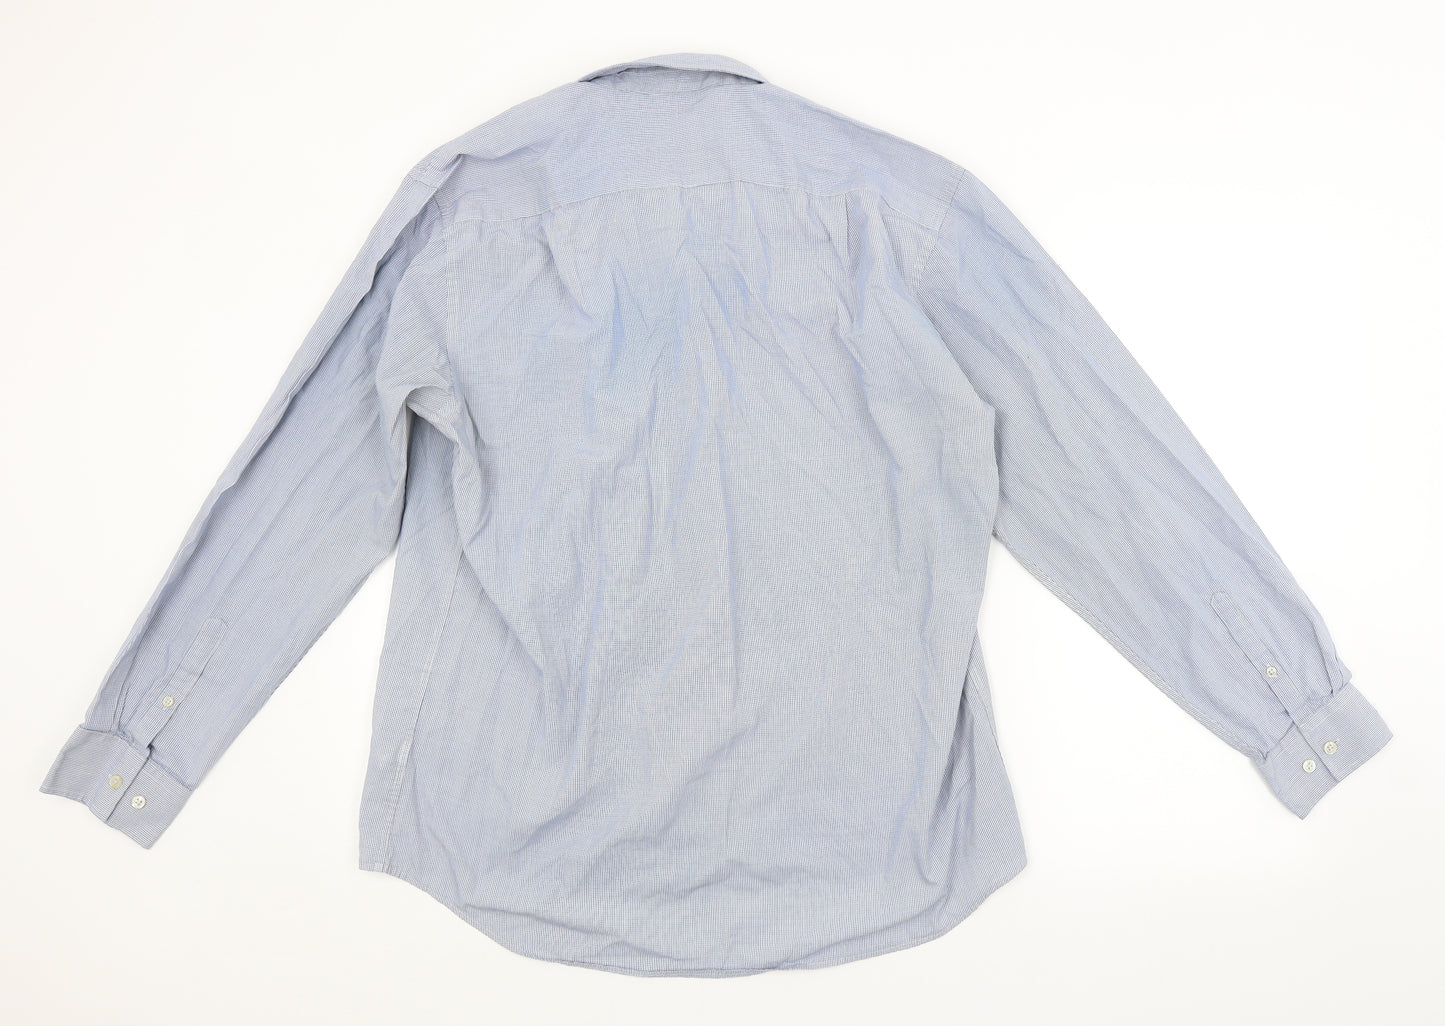 F&F Mens Blue Check   Dress Shirt Size 16.5